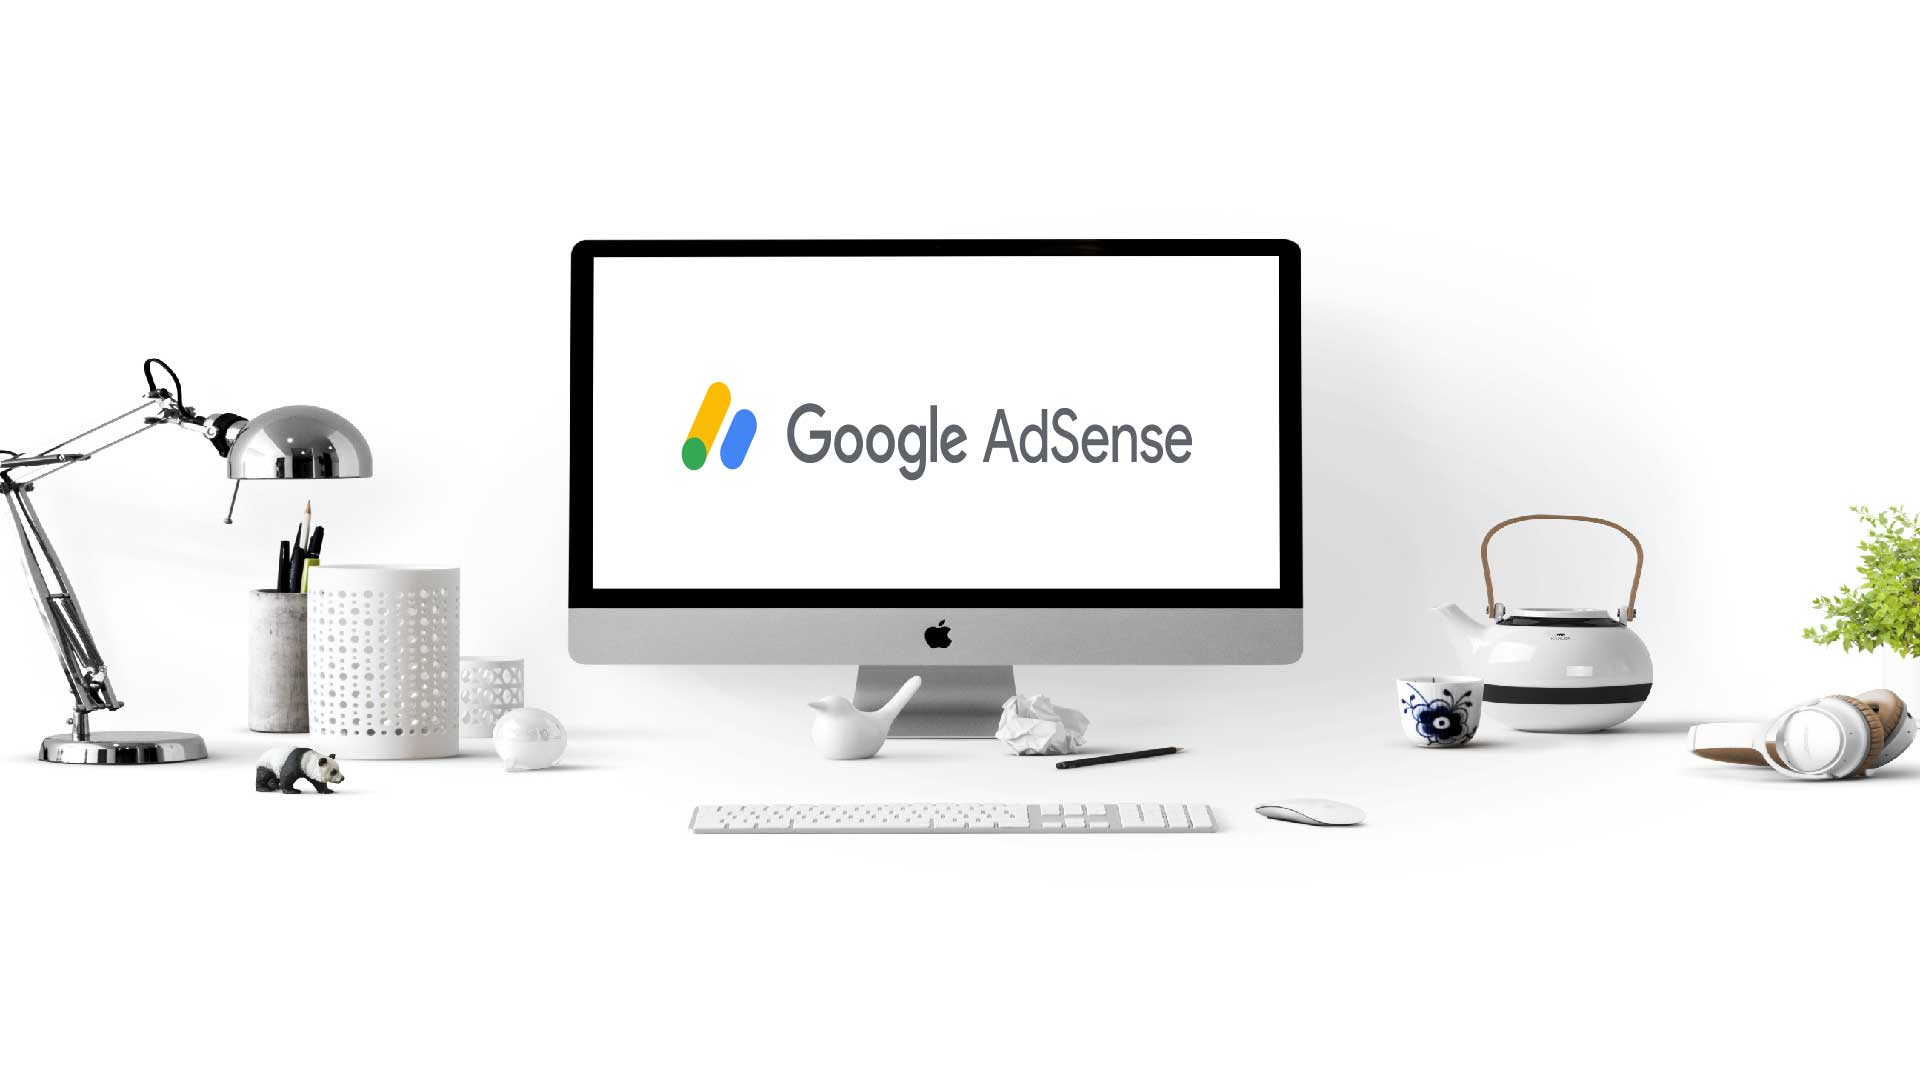 Google Adsense account on an E-Commerce website-good or not?